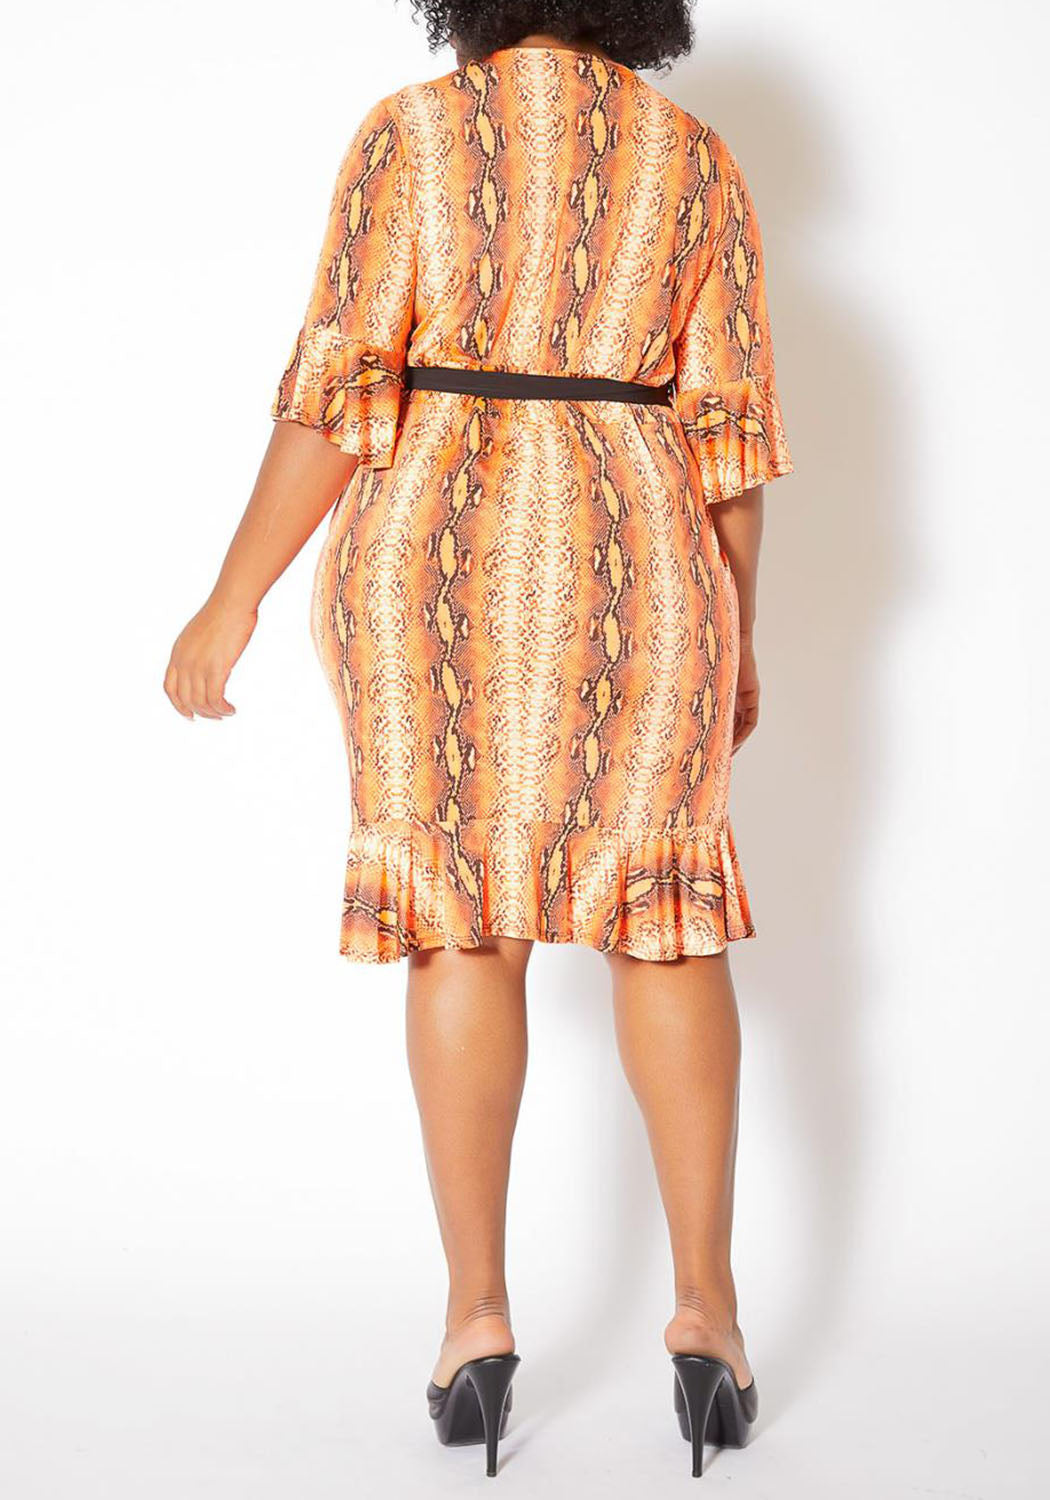 HI Curvy Plus Size Women Slit Details Mini Dress Made in USA